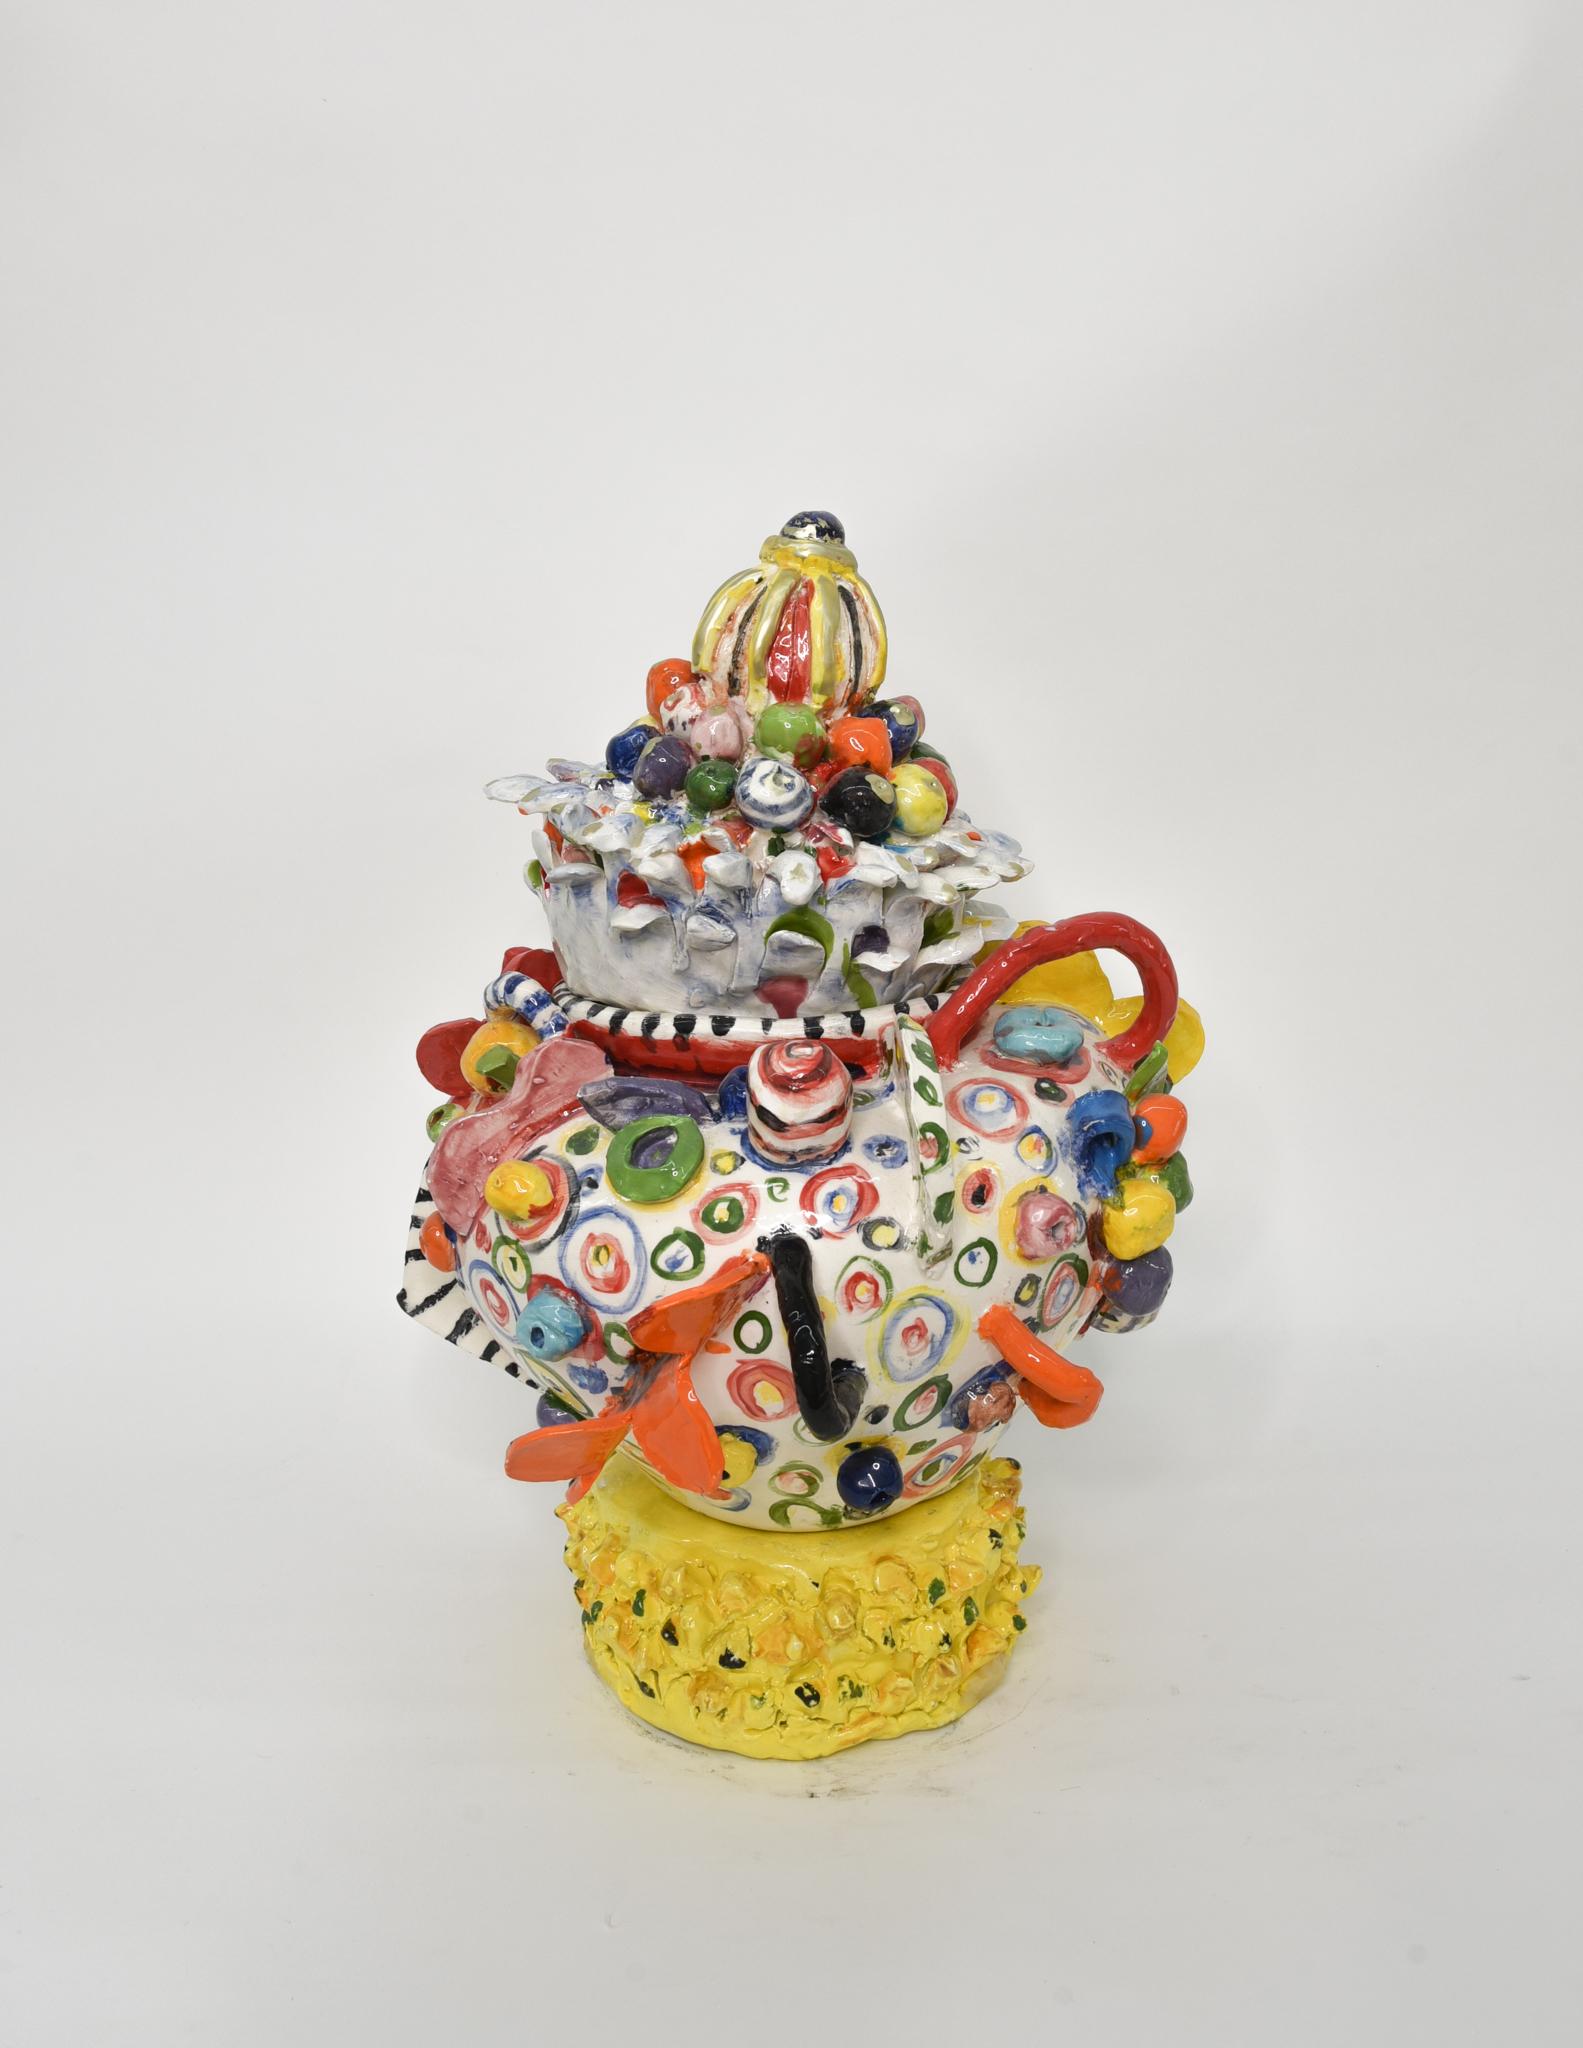 Untitled XV. Glazed ceramic abstract jar sculpture